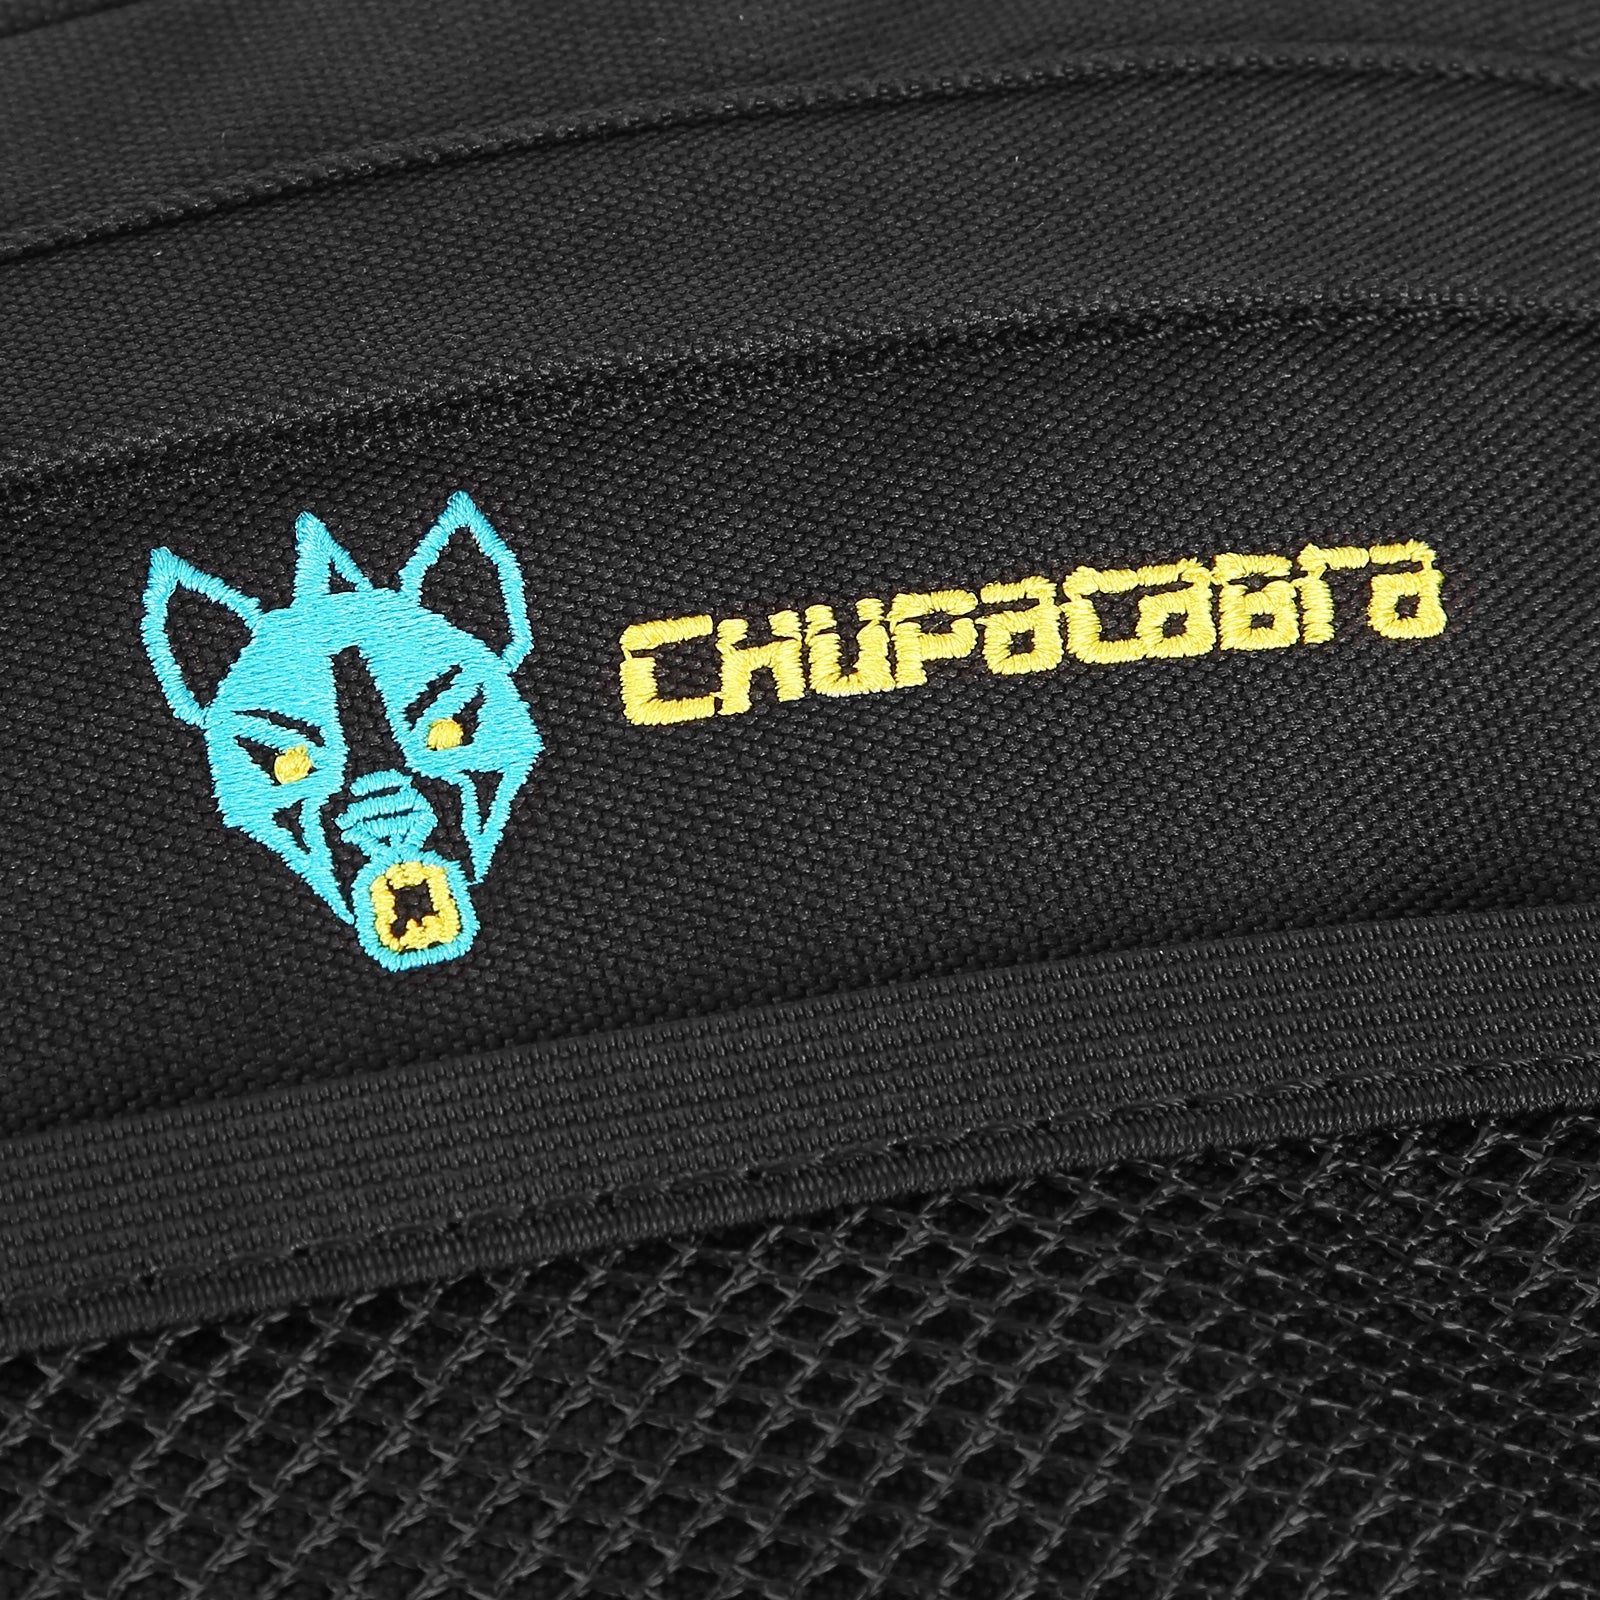 Polaris RZR Pro / Turbo R Front Door Bags | Chupacabra Offroad